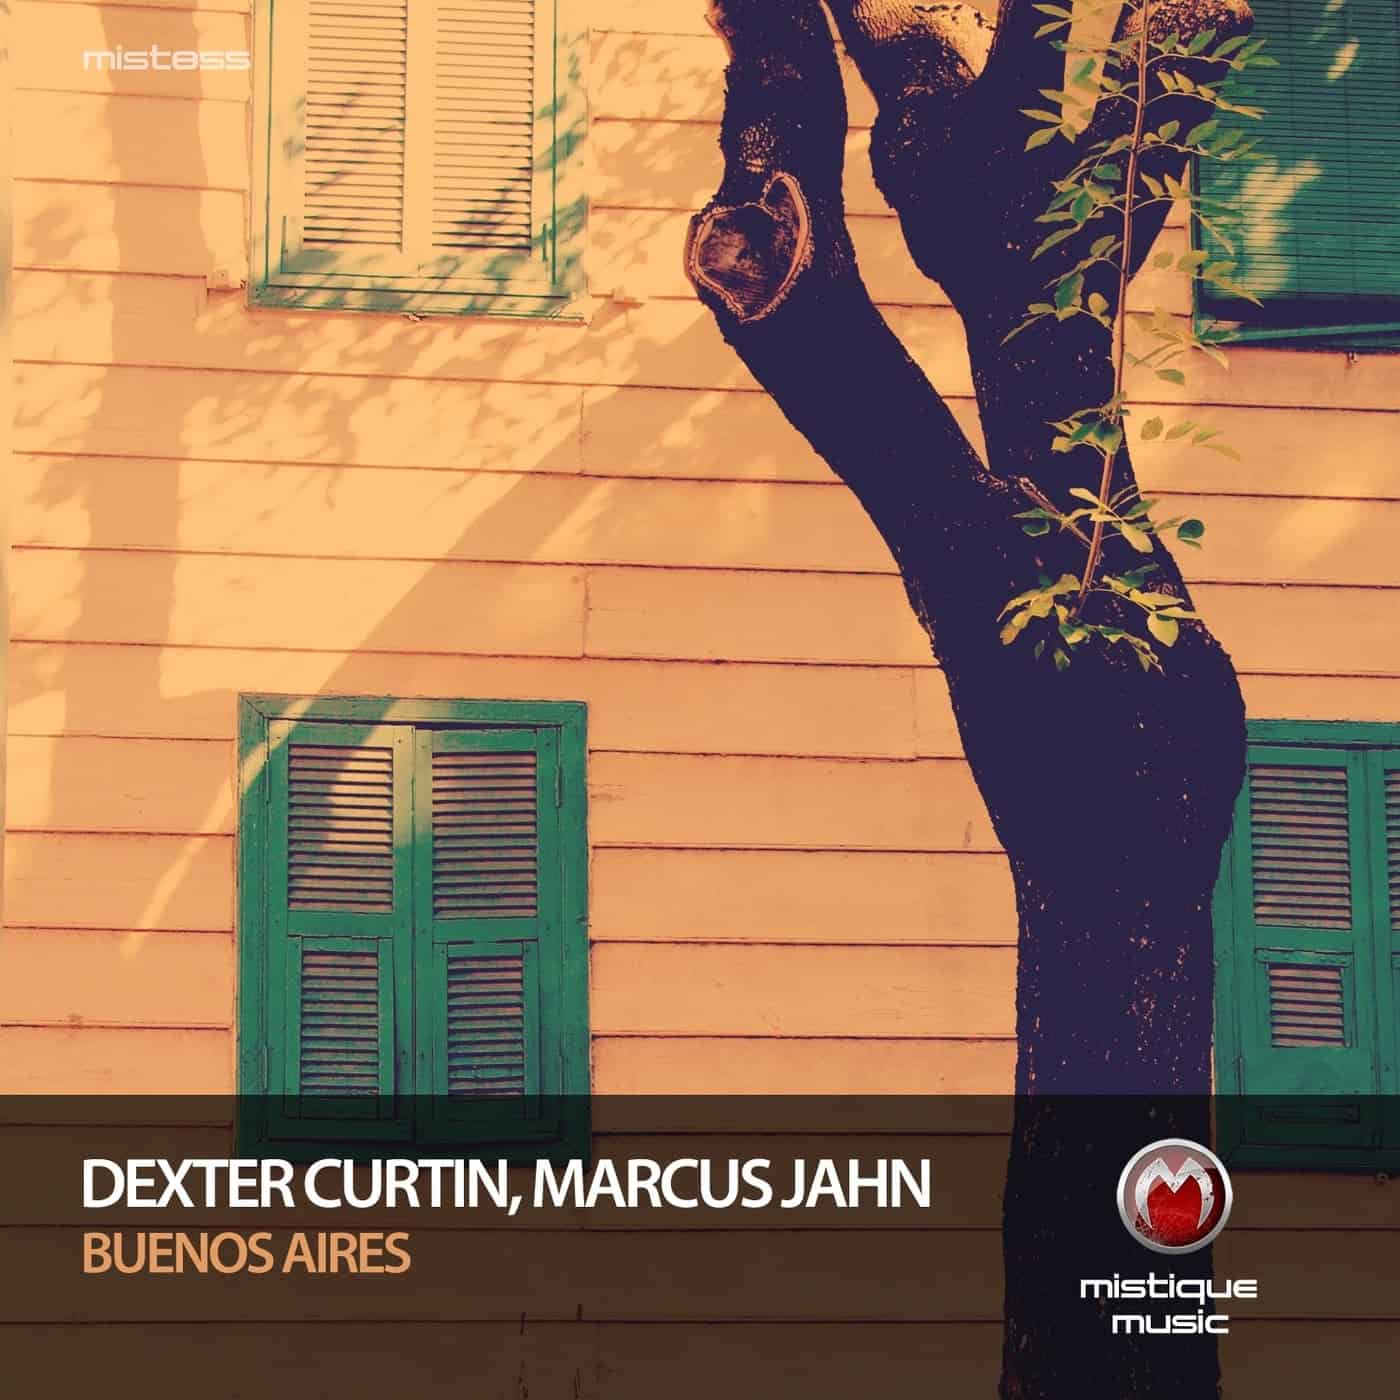 Download Dexter Curtin, Marcus Jahn - Buenos Aires [MIST855] on Electrobuzz